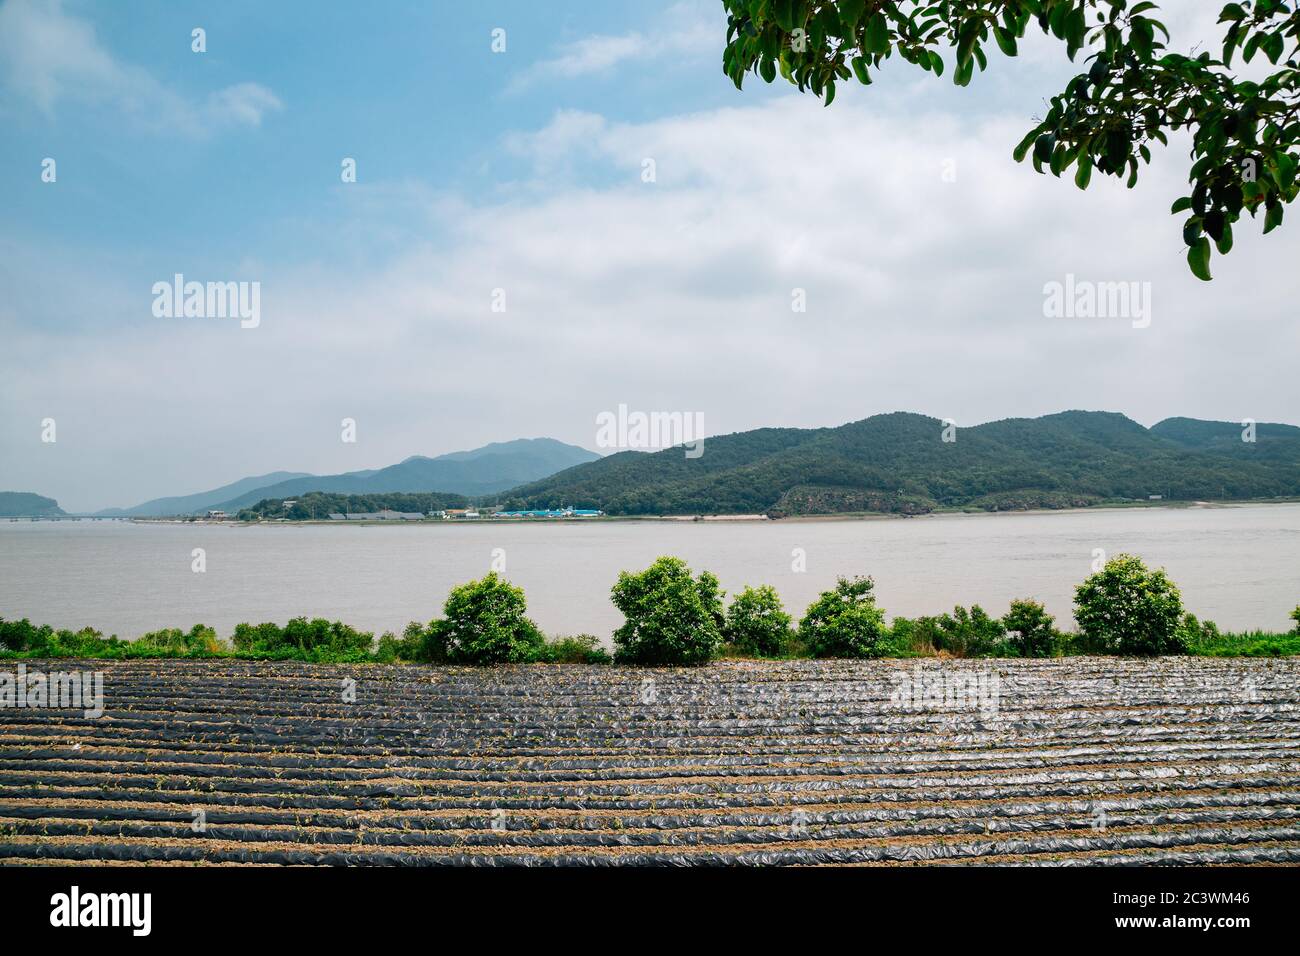 Ganghwa island Countryside village in Incheon, Korea Stock Photo